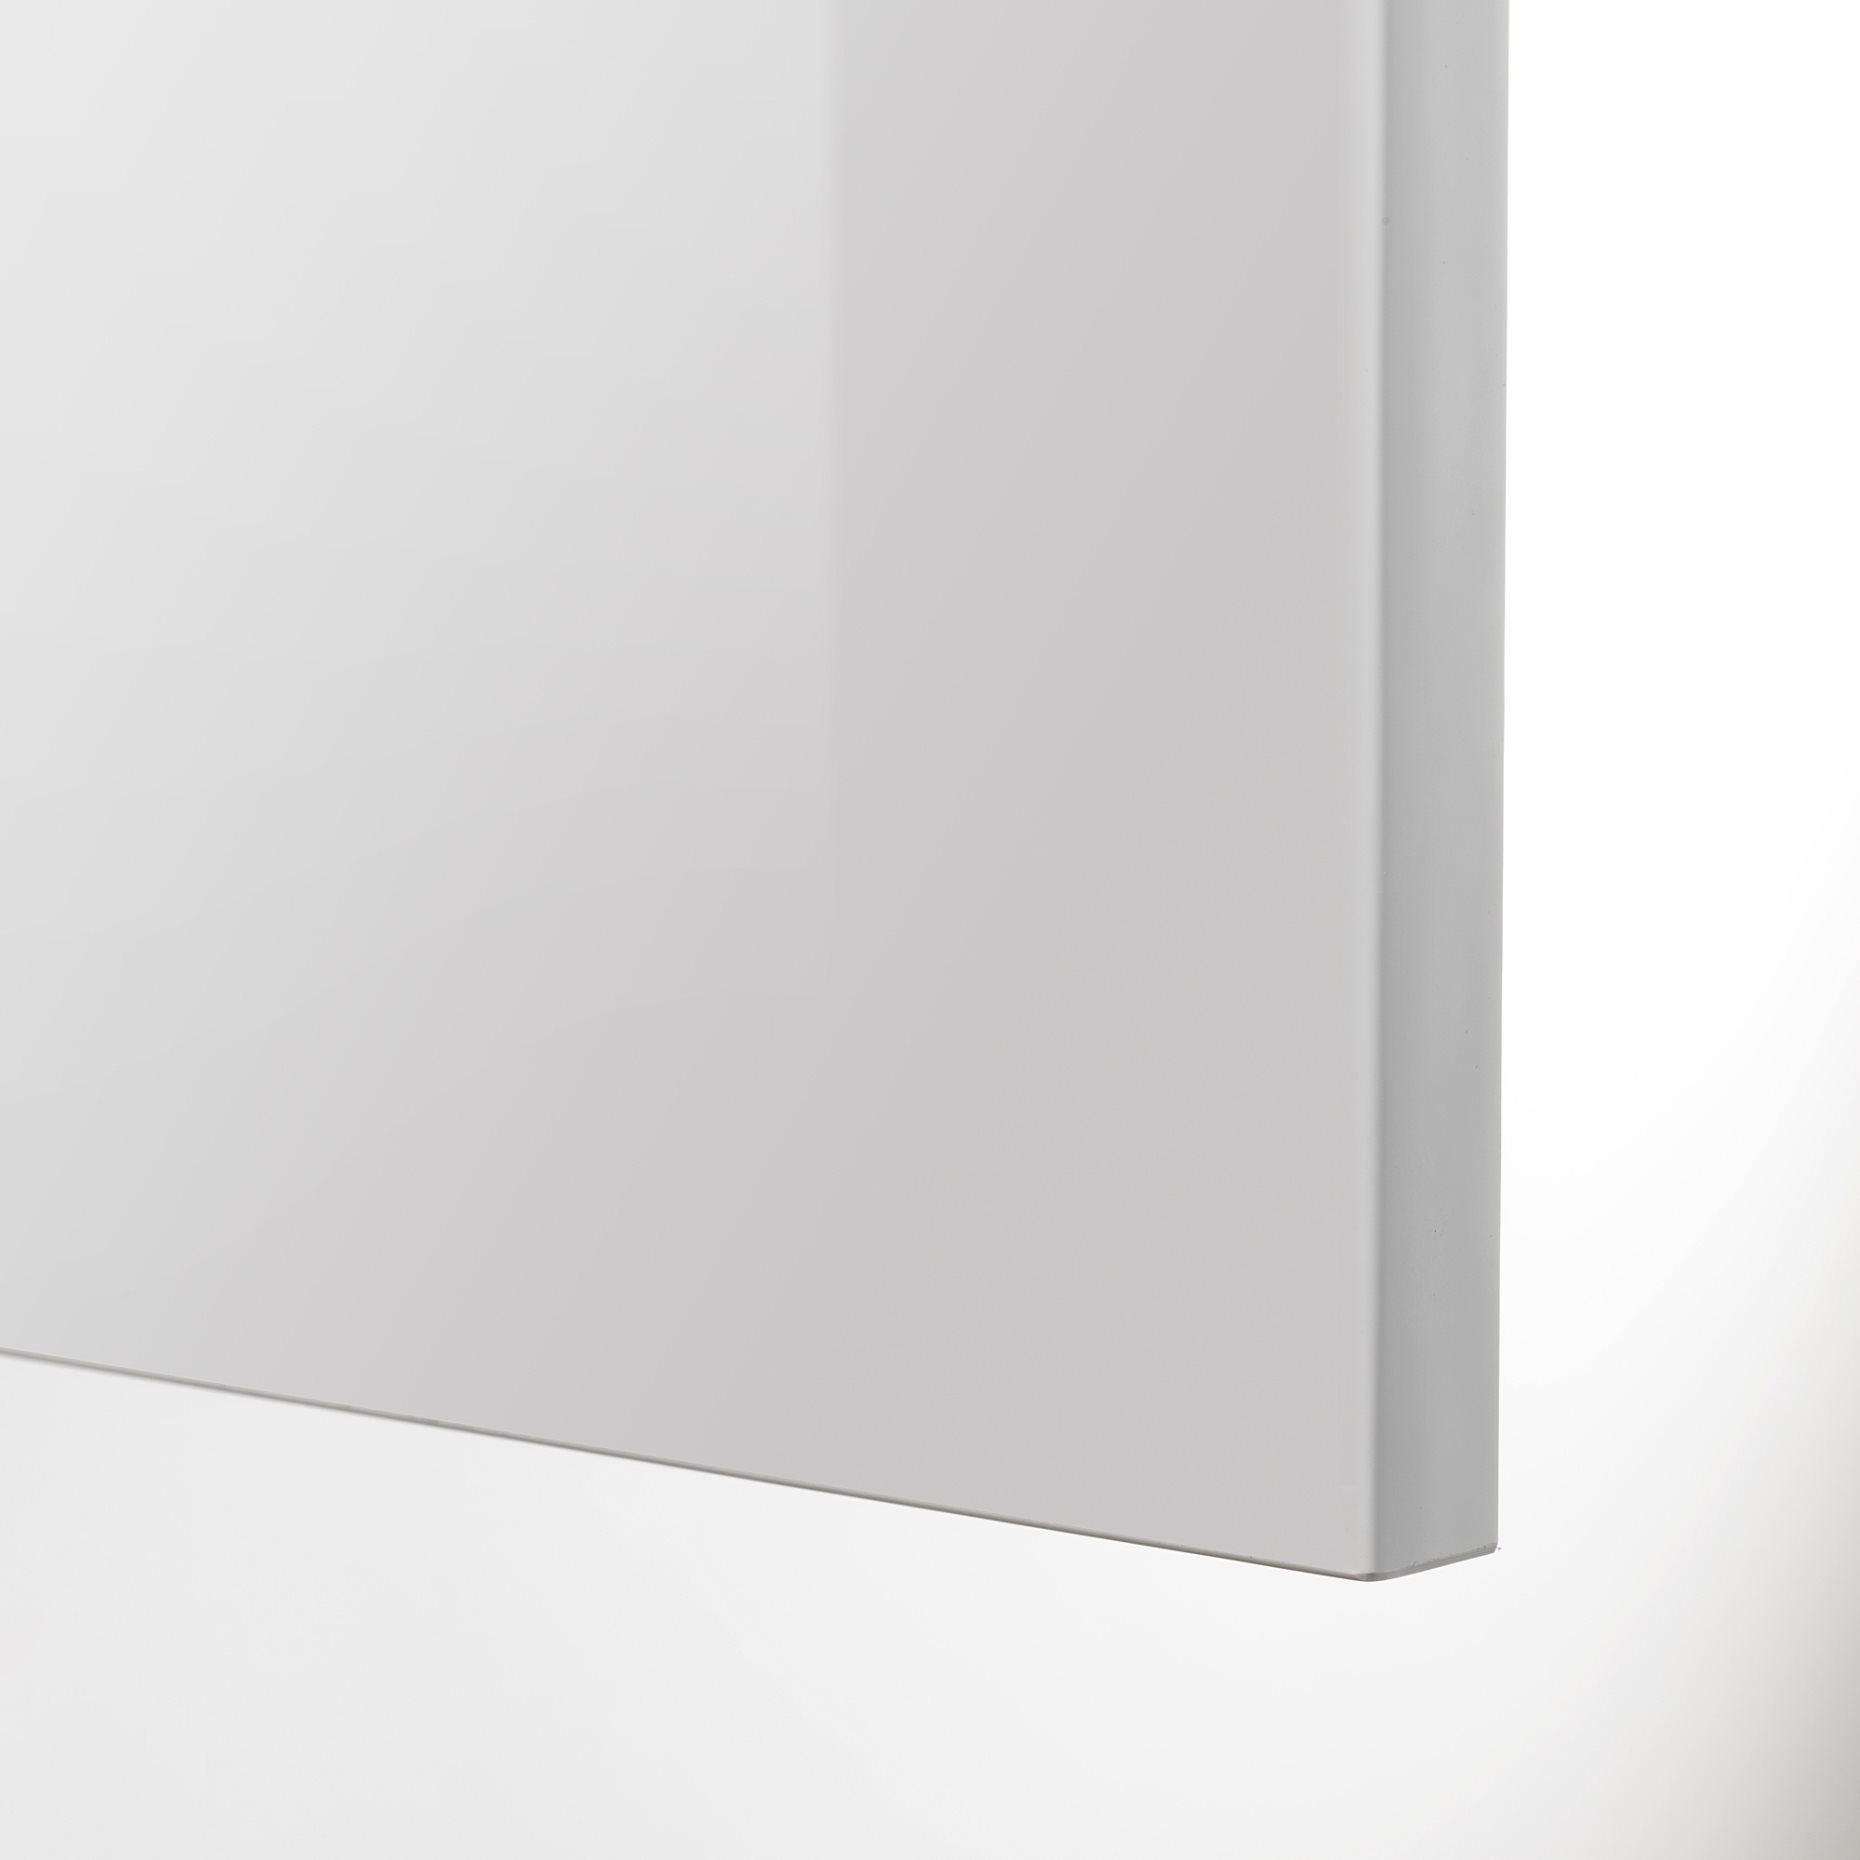 METOD/MAXIMERA, ψηλό ντουλάπι για φούρνο πόρτα/2προσόψεις/2 ψηλά συρτάρια, 60x60x220 cm, 694.634.89